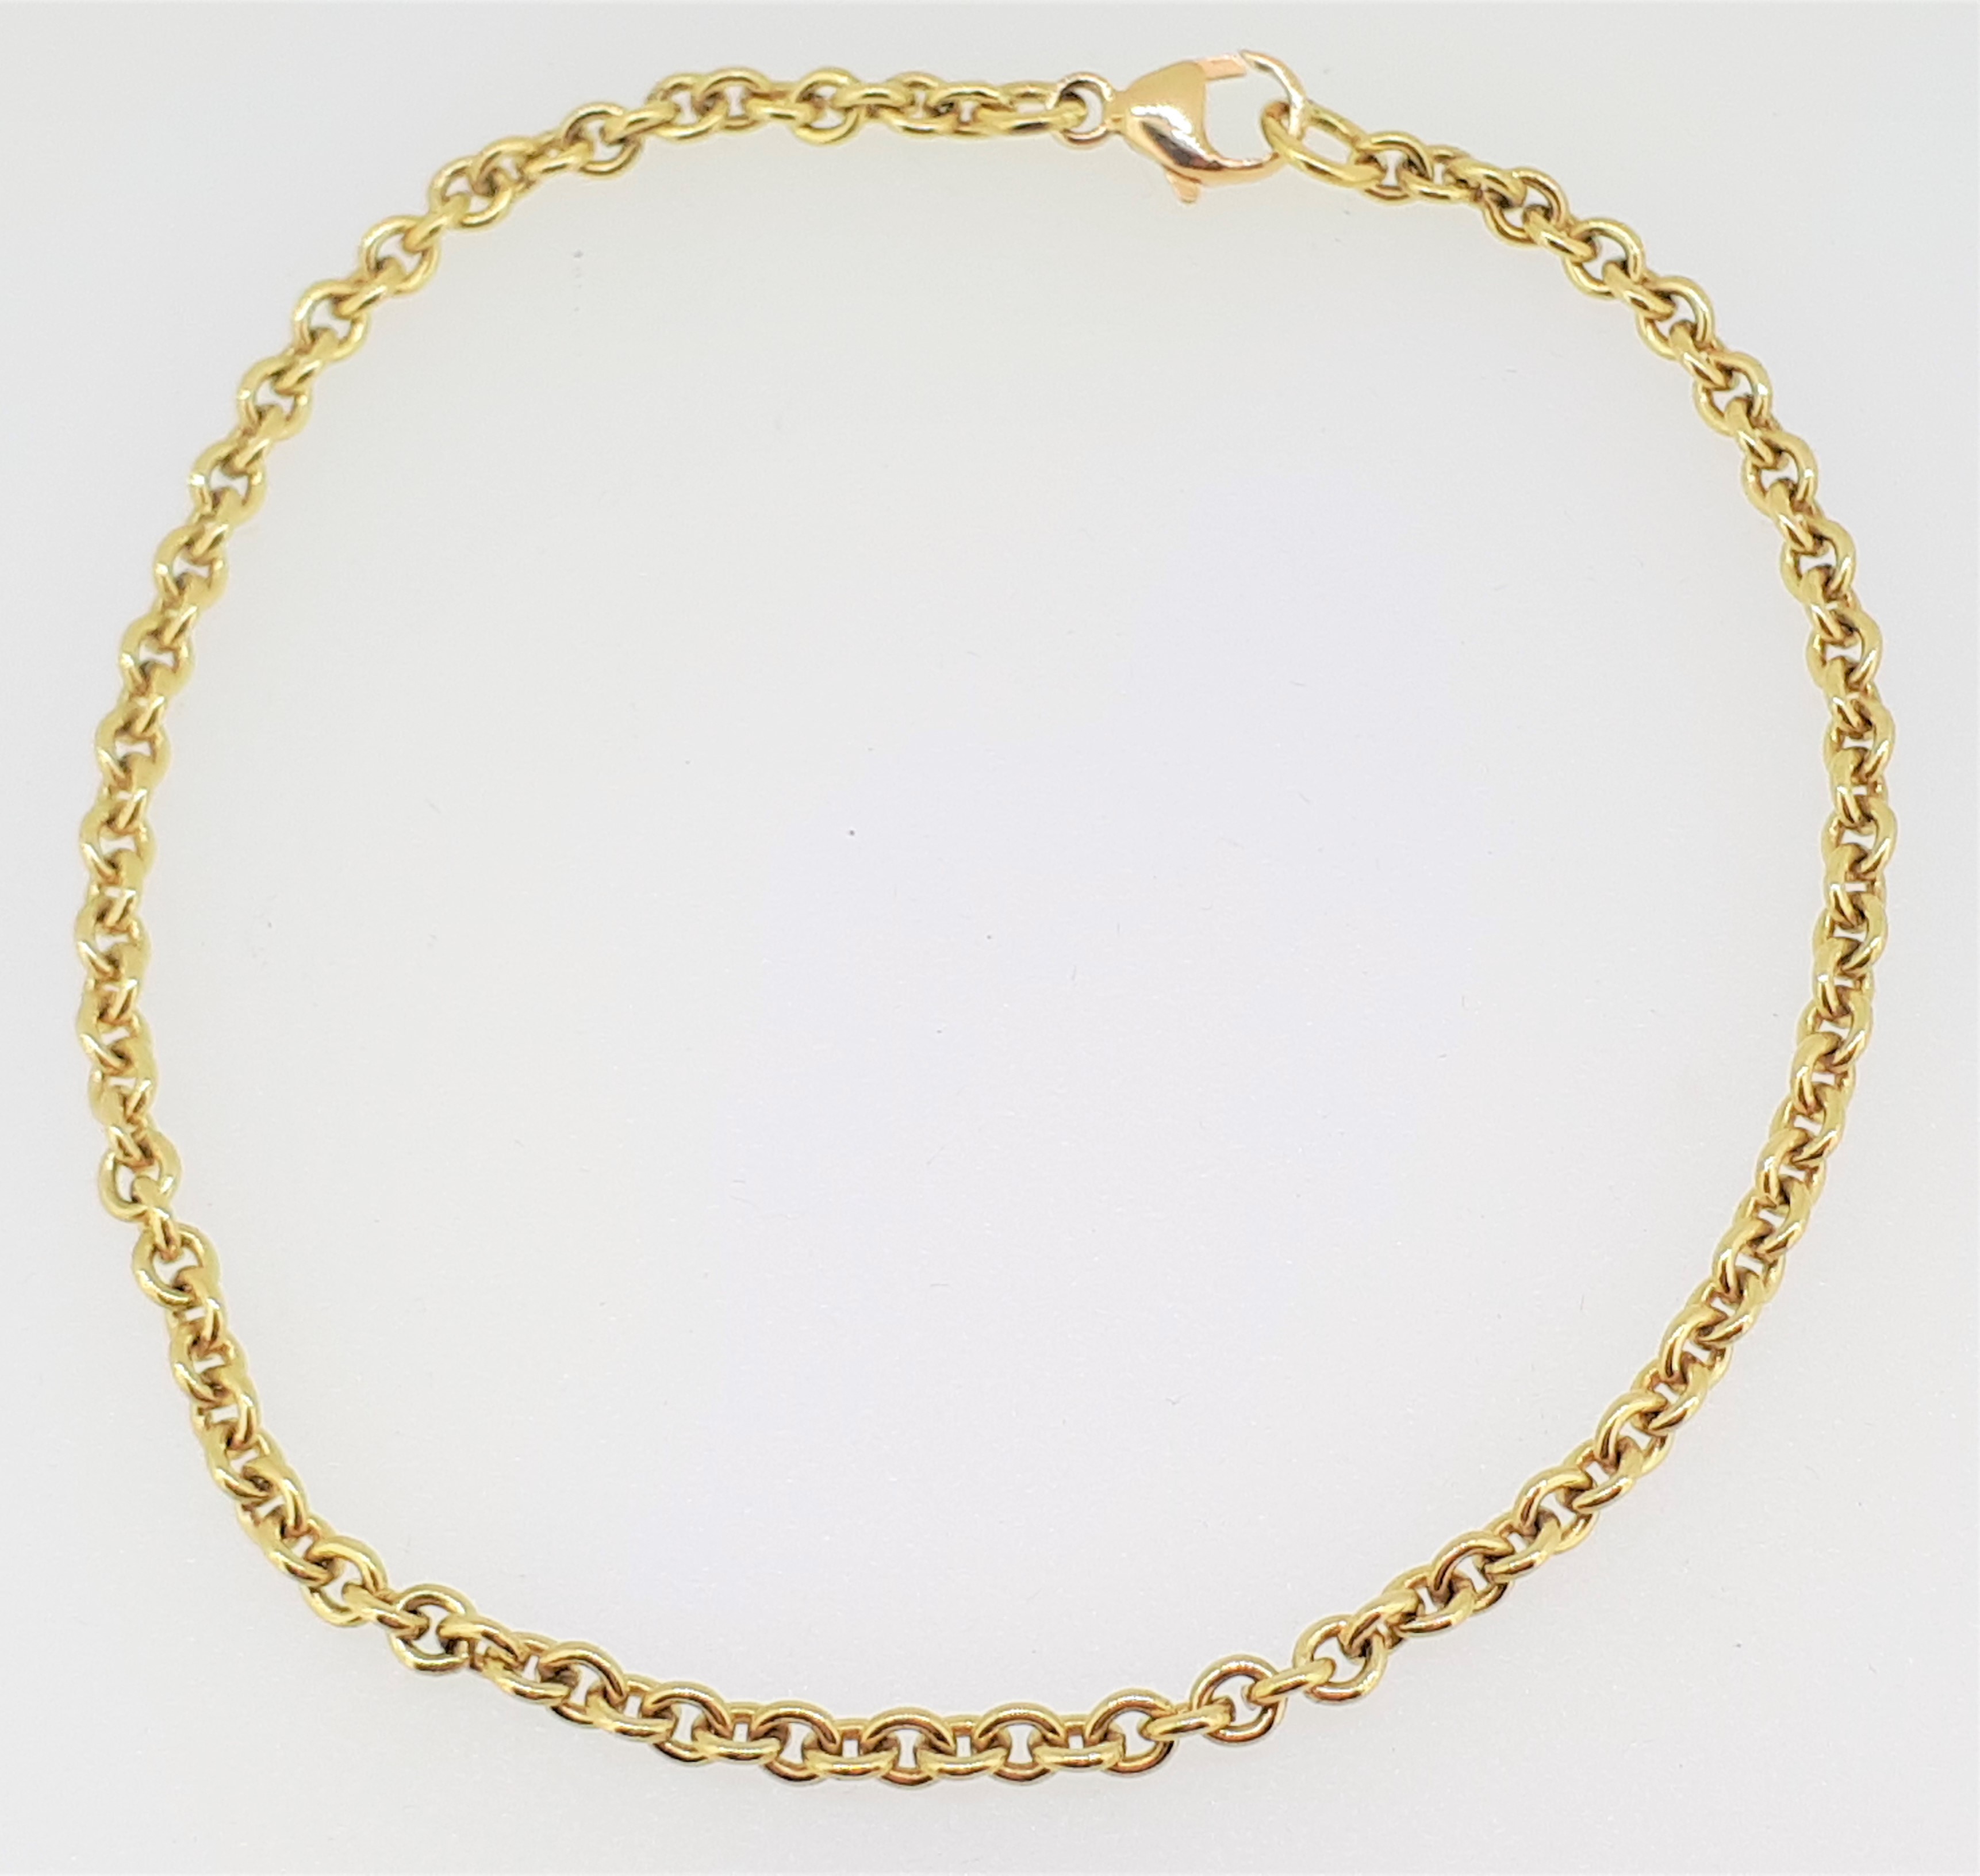 18ct Yellow Gold (750) Round Belcher Bracelet - 7.5" / 19cm - Image 2 of 2